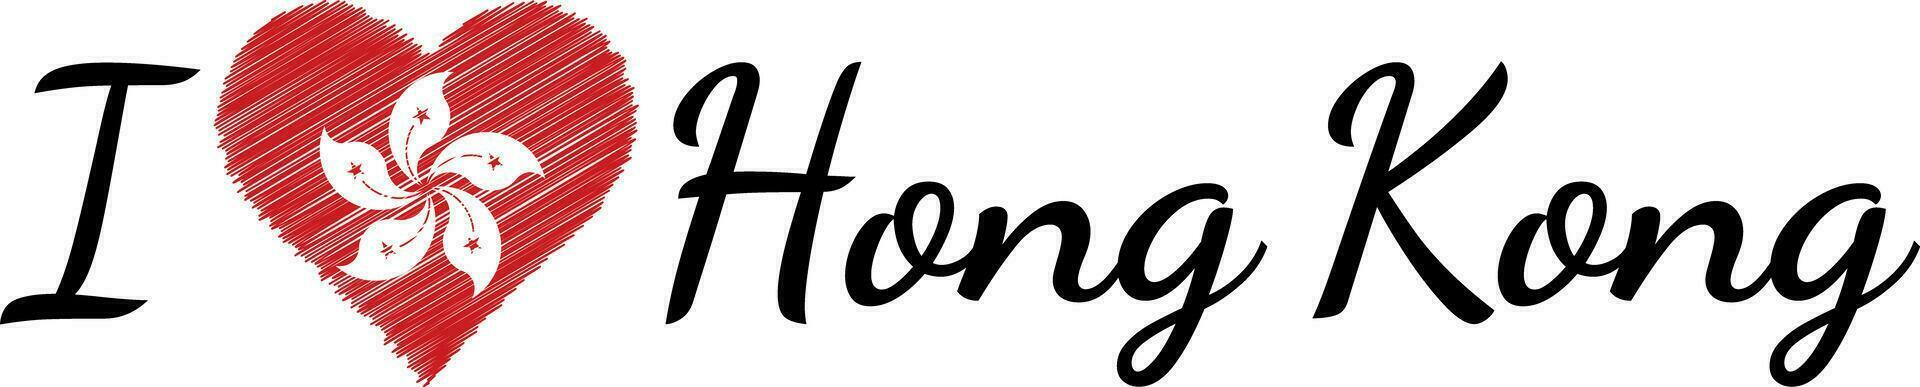 ik liefde land hong Kong tekst tekening kalligrafische hart hk vector